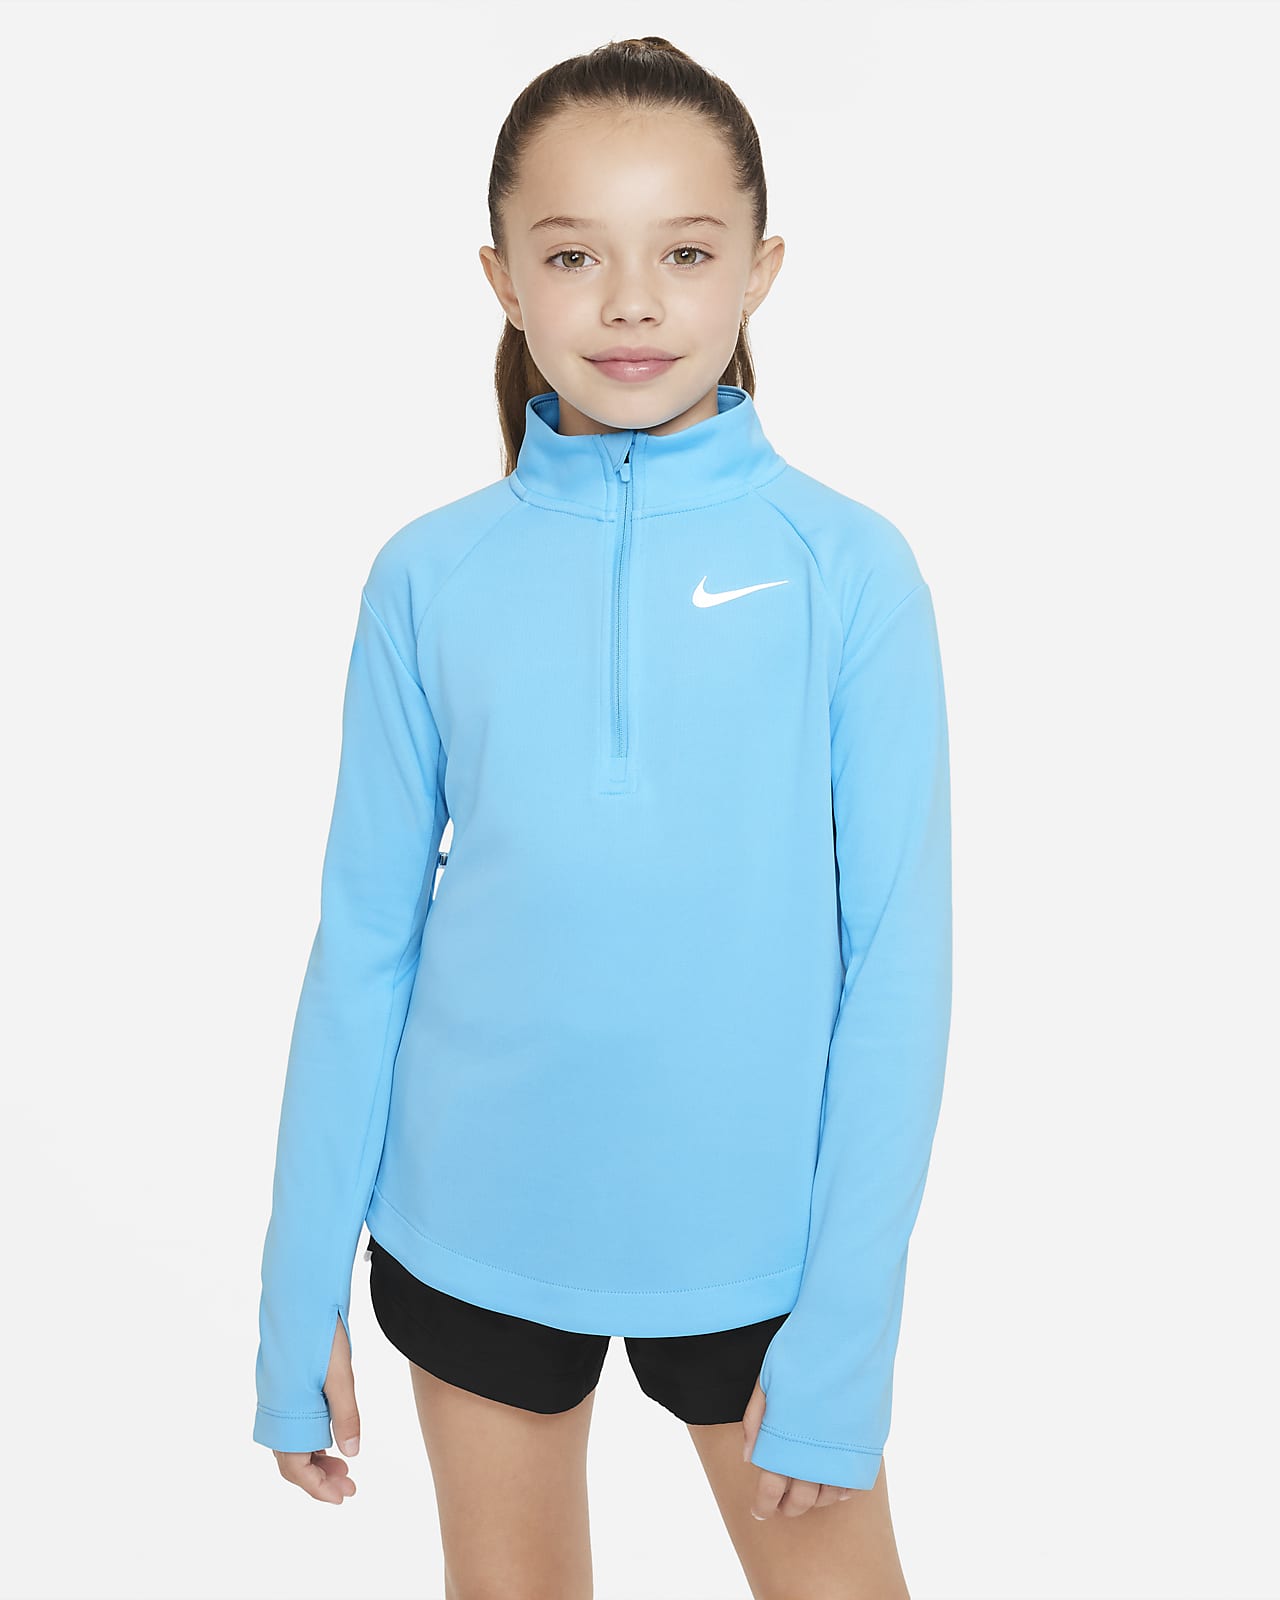 Nike Dri-FIT Big Kids' (Girls') Running Nike.com